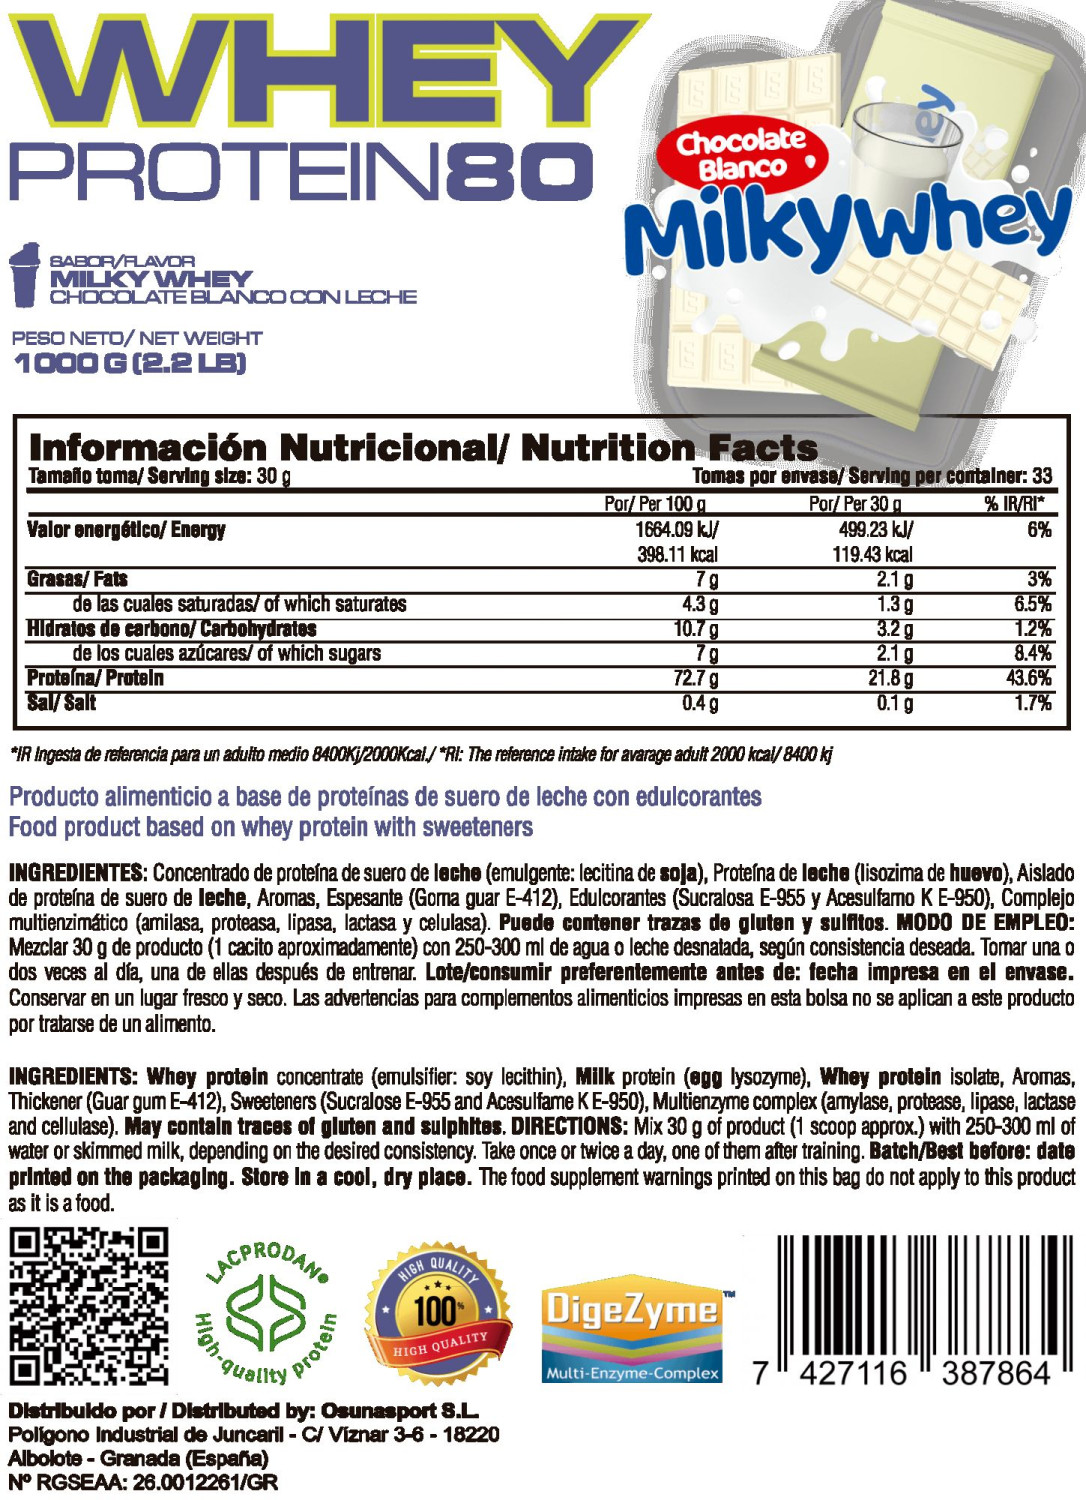 Whey Protein80 - 1kg De Mm Supplements Sabor Chocolate Blanco Milky Whey